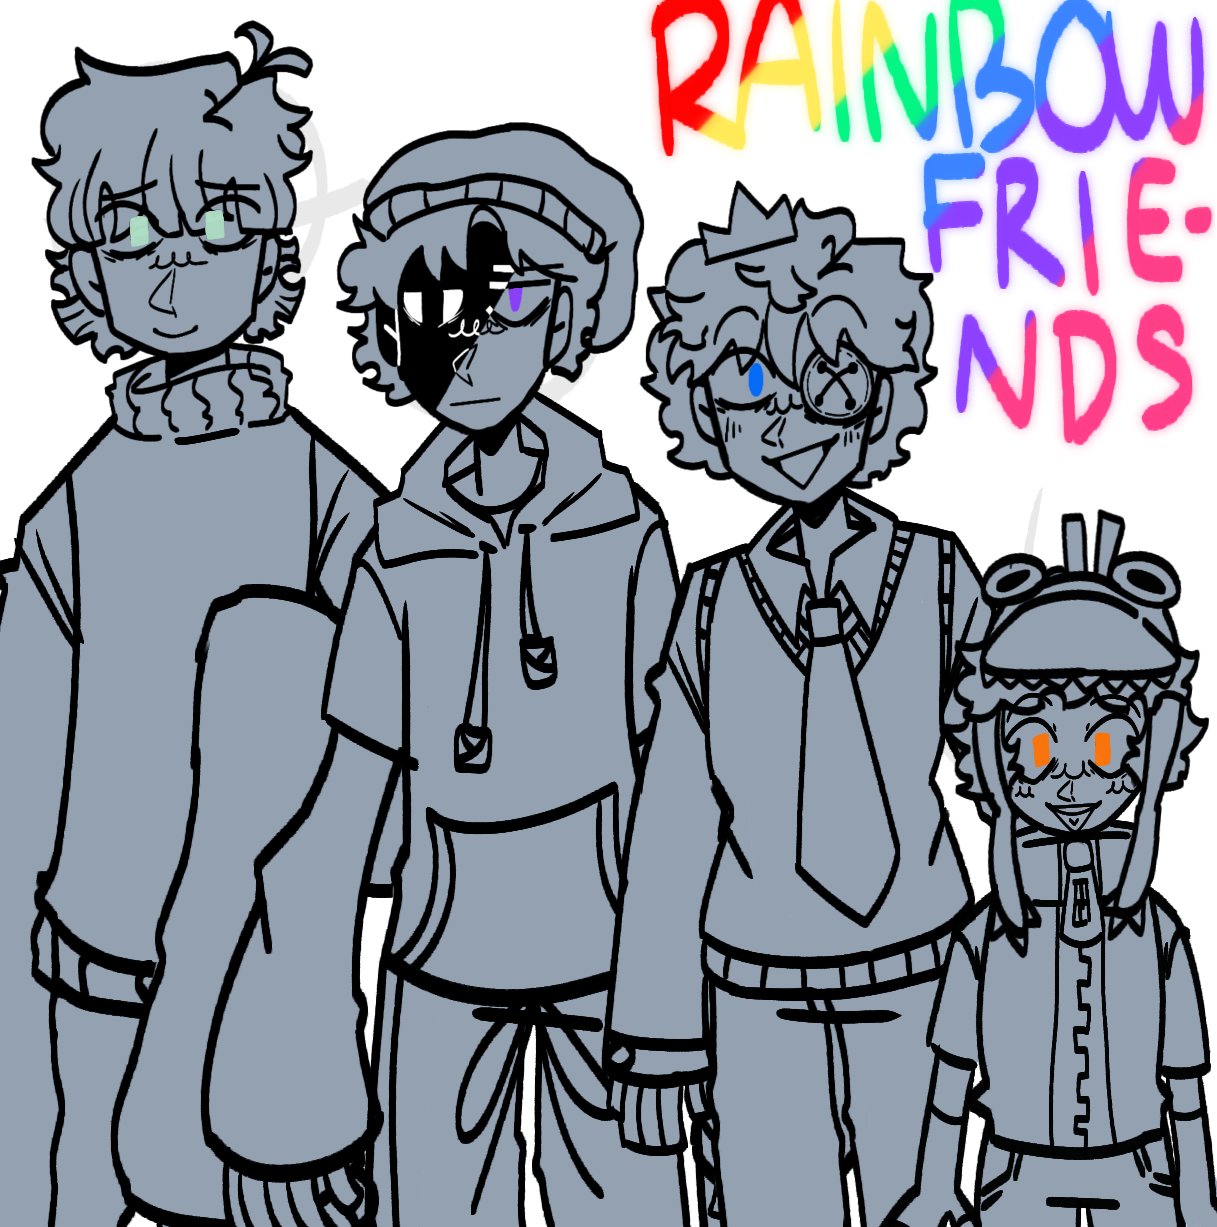 Rainbow Friends art!